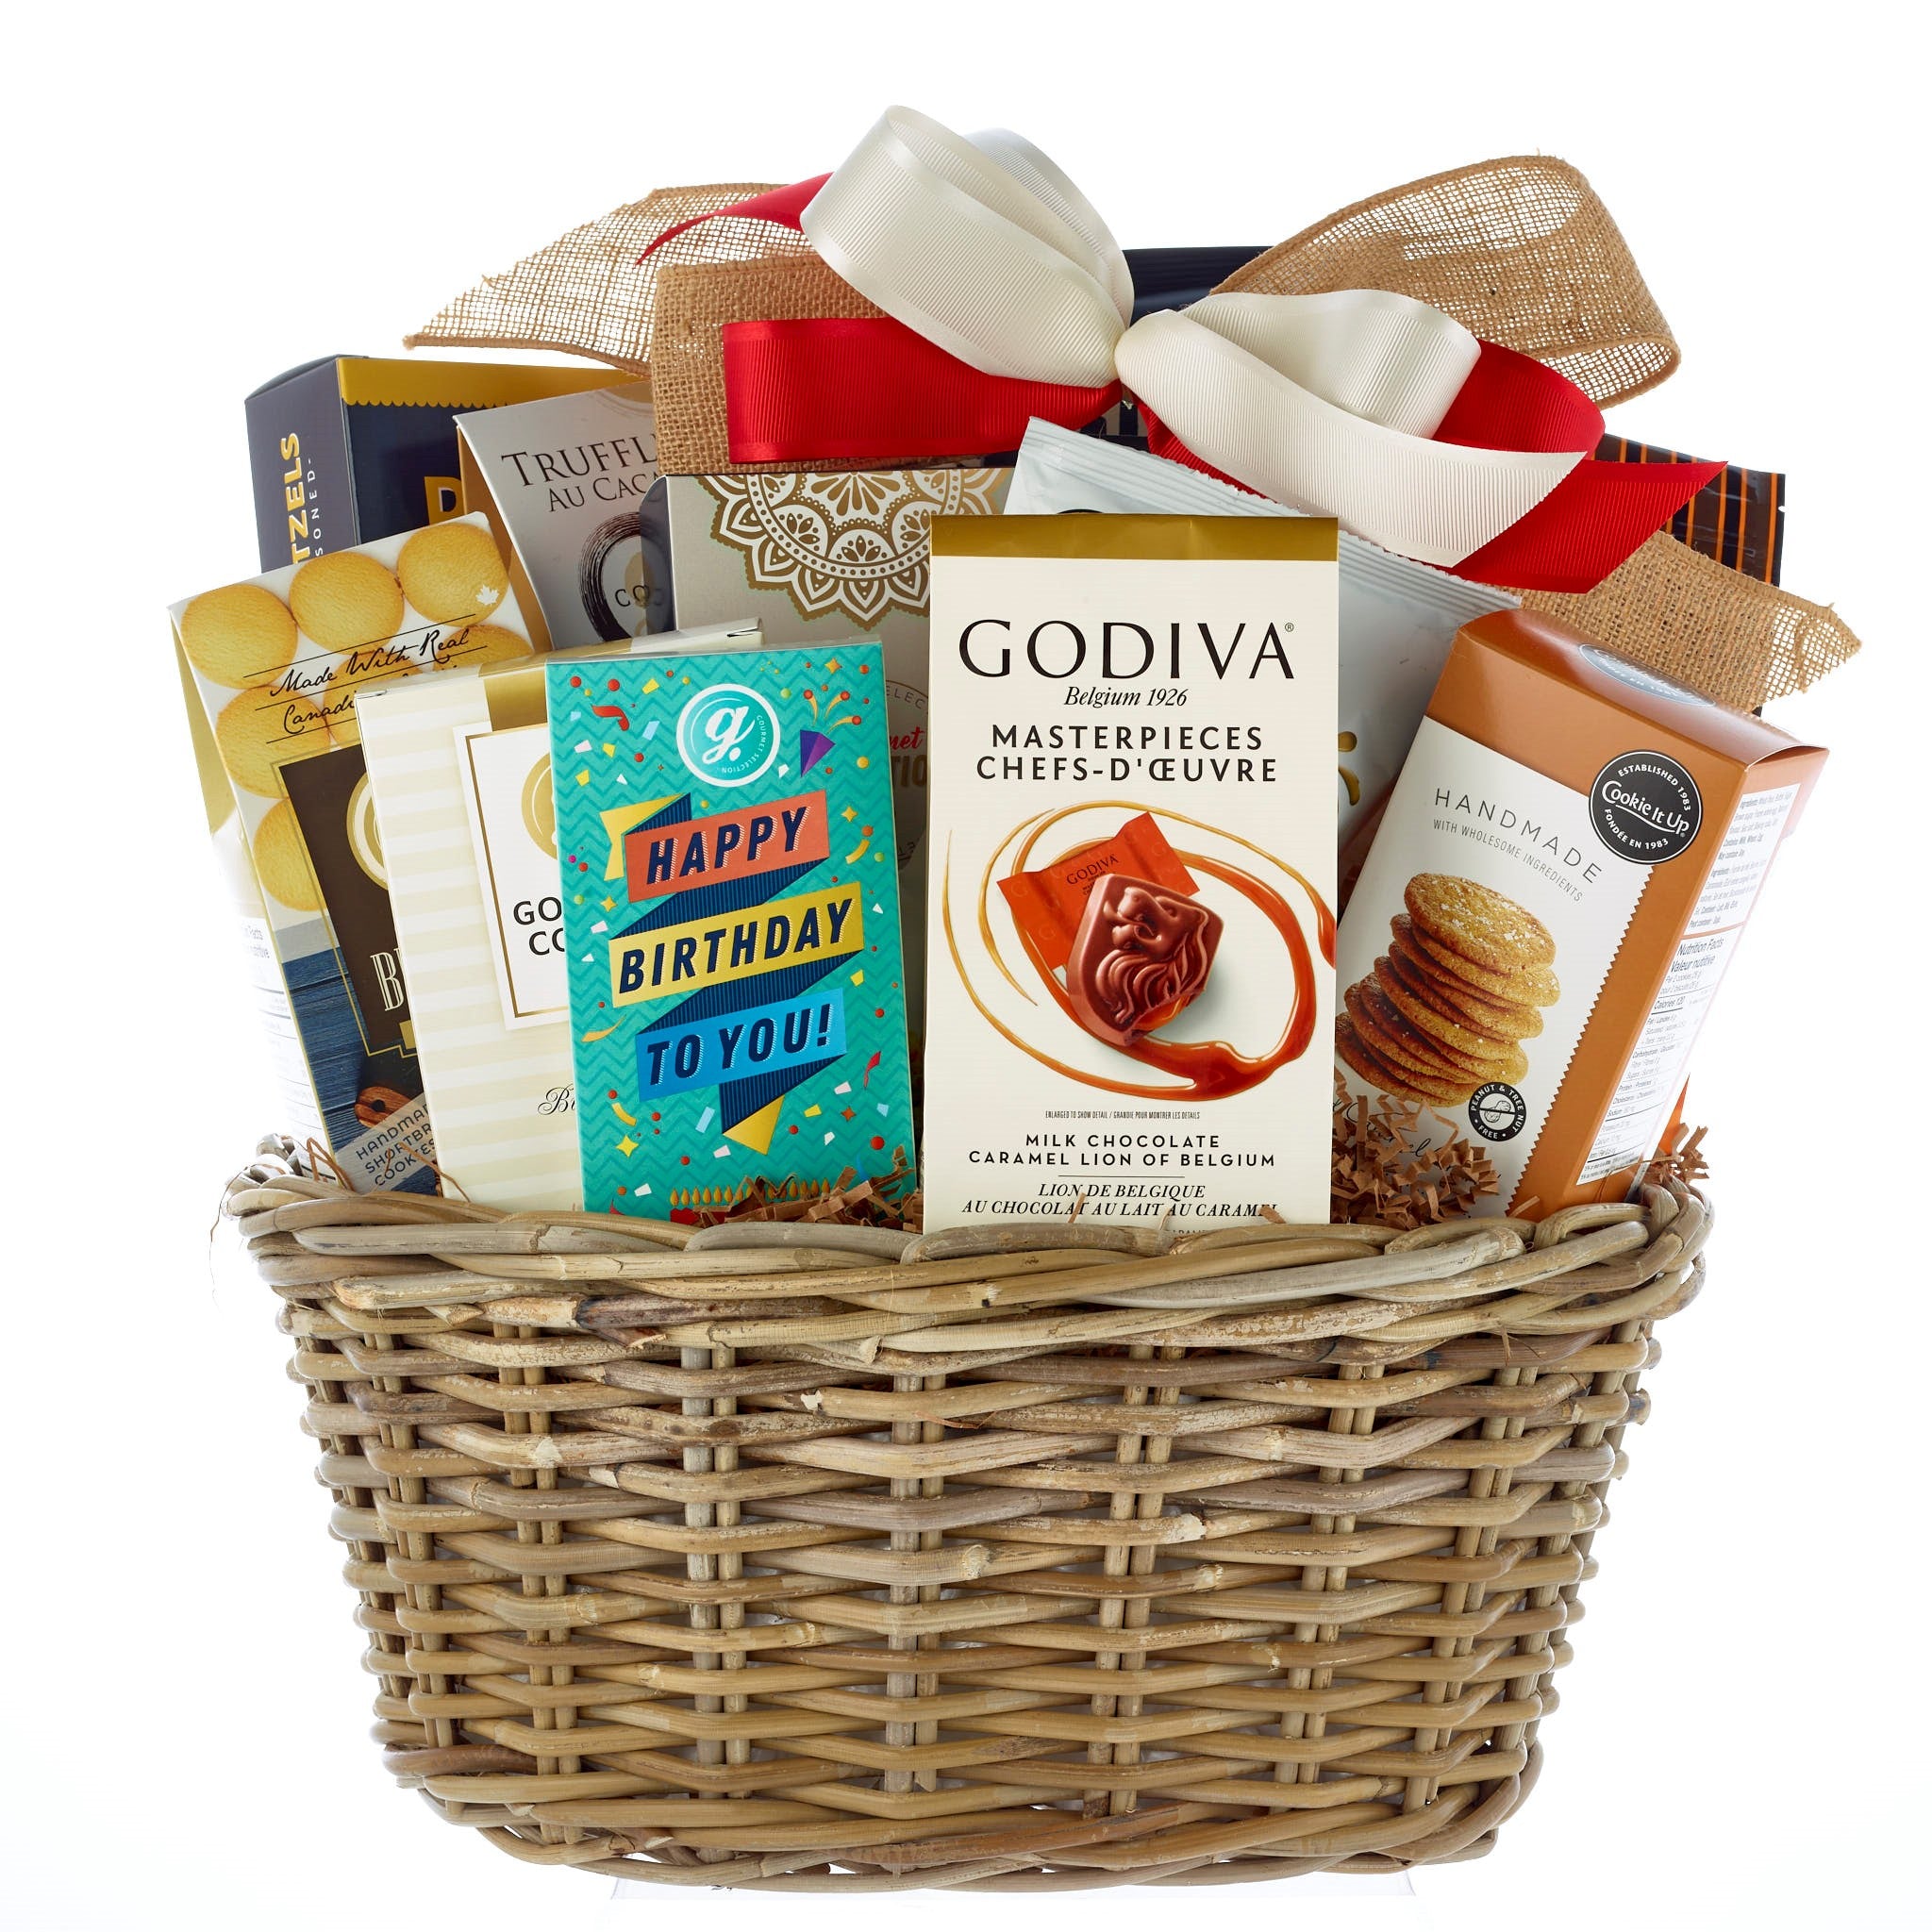 Holiday gift baskets toronto | Holiday gift baskets richmond hill